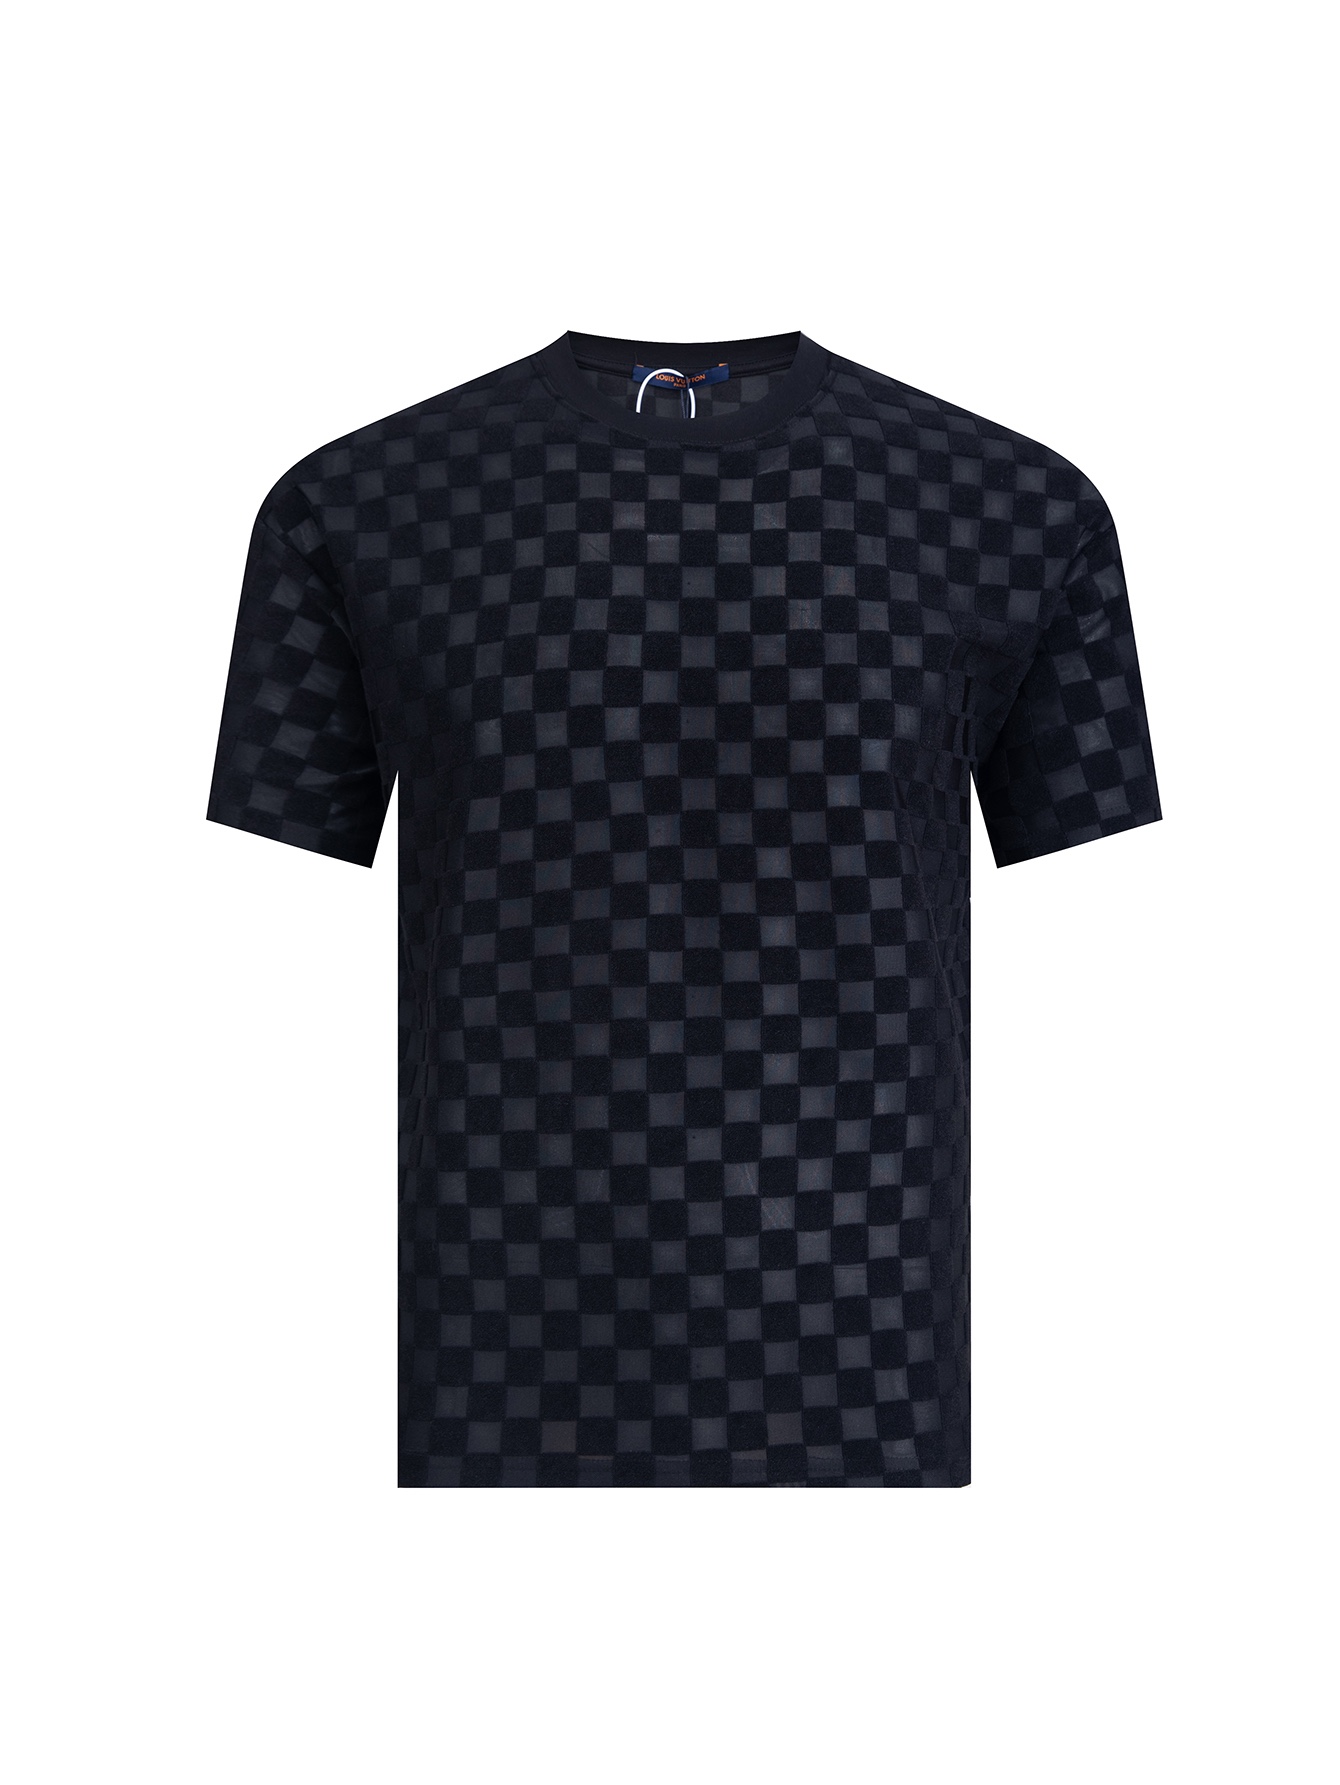 Louis Vuitton Clothing T-Shirt Black White Unisex Short Sleeve